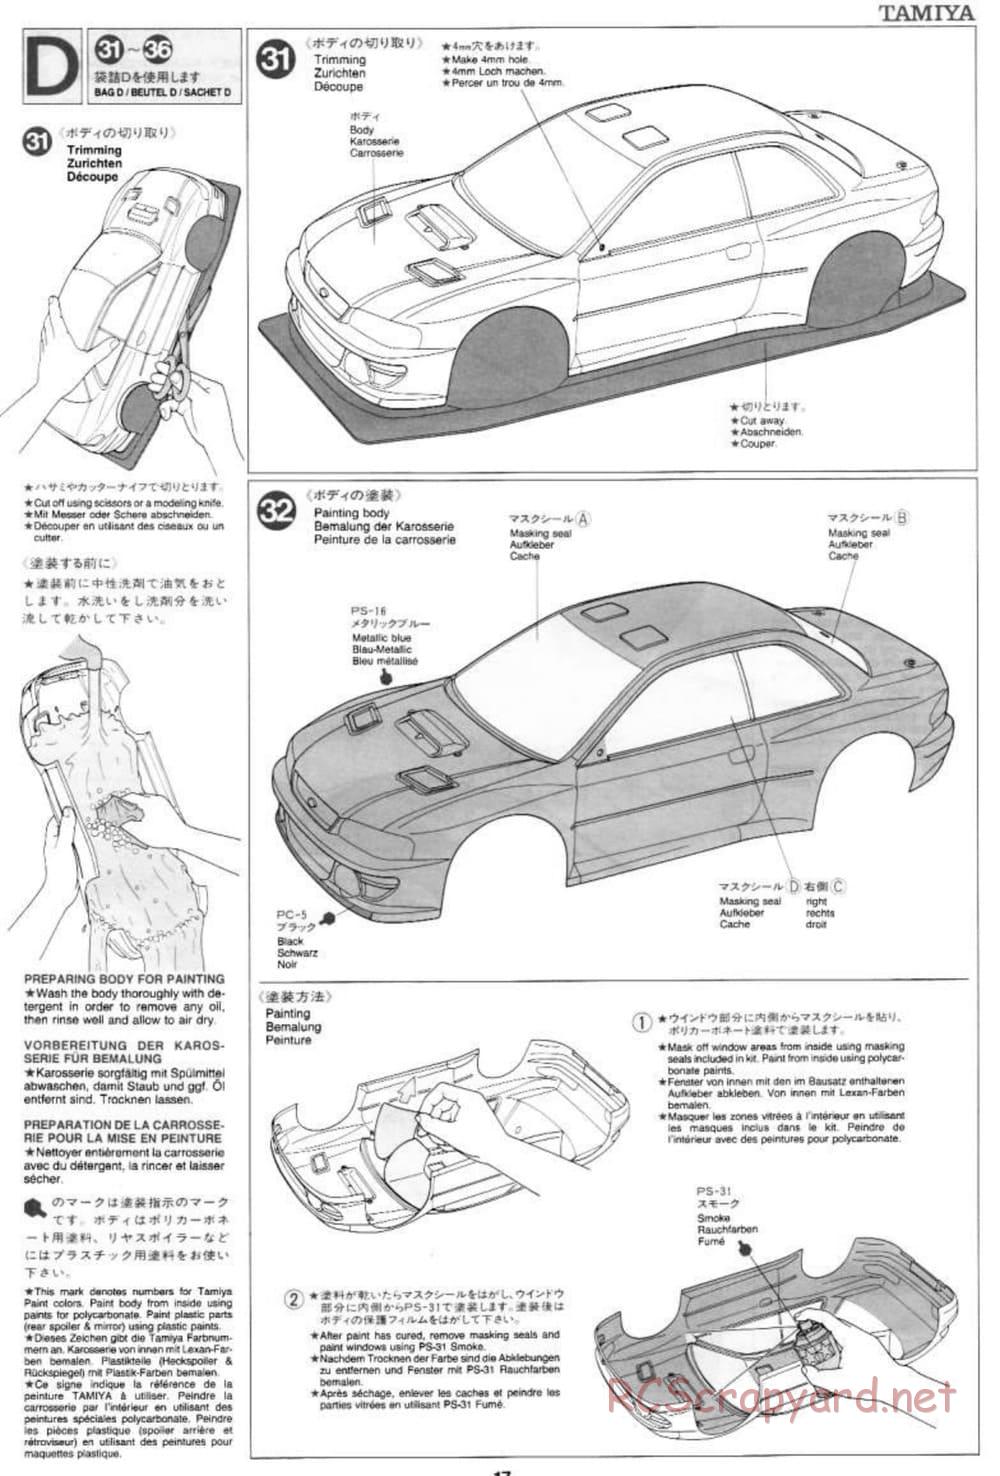 Tamiya - Subaru Impreza WRC 97 - TA-03F Chassis - Manual - Page 17